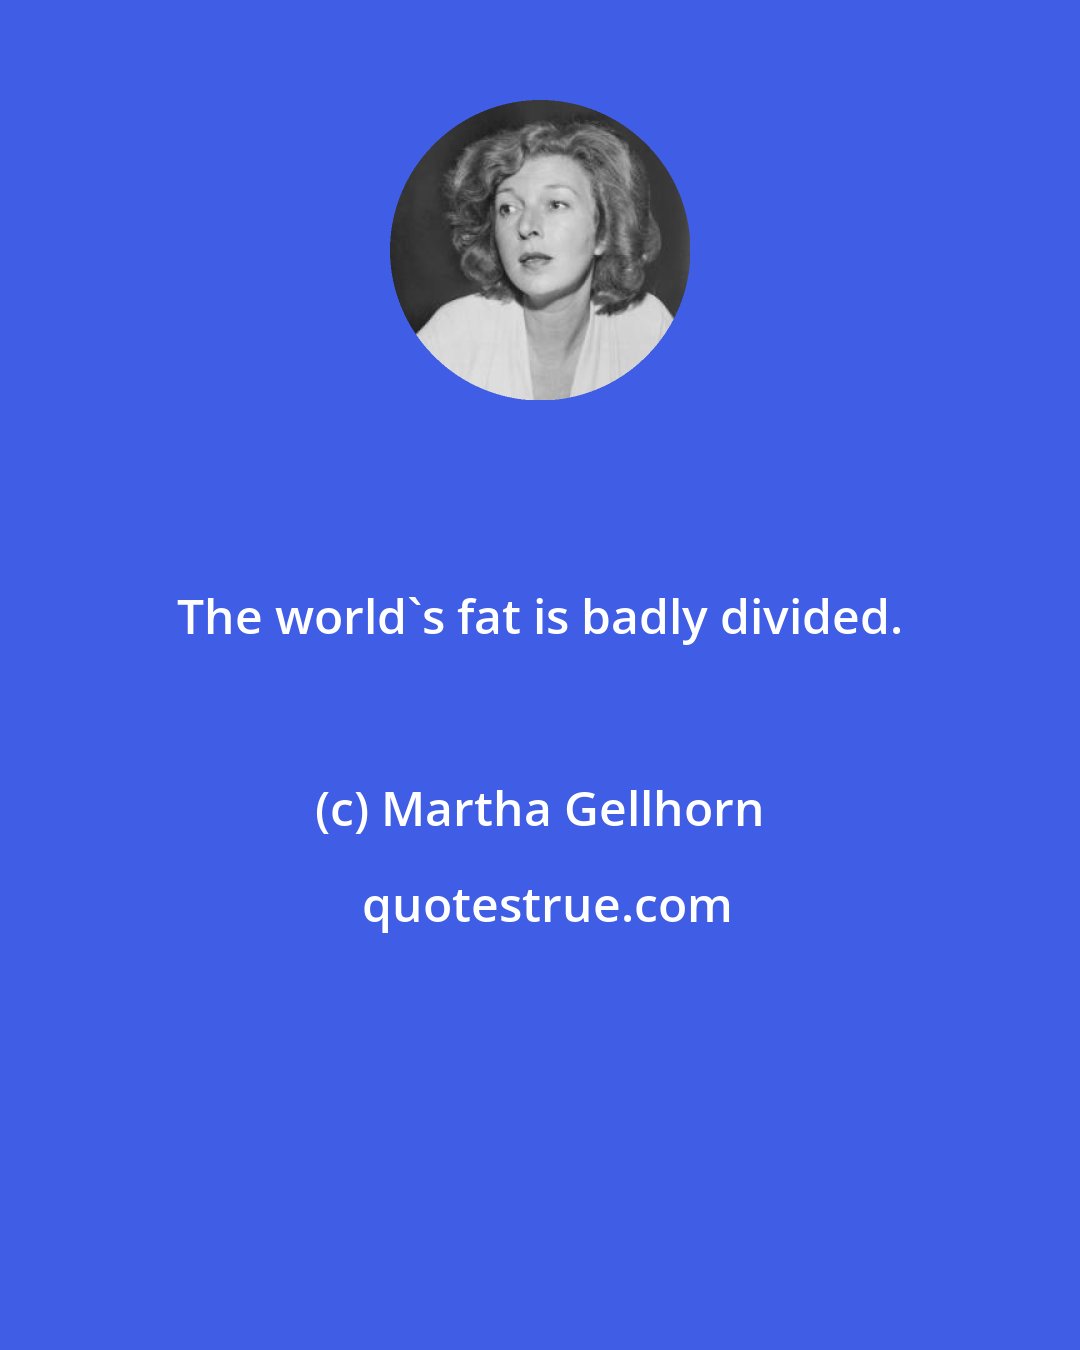 Martha Gellhorn: The world's fat is badly divided.